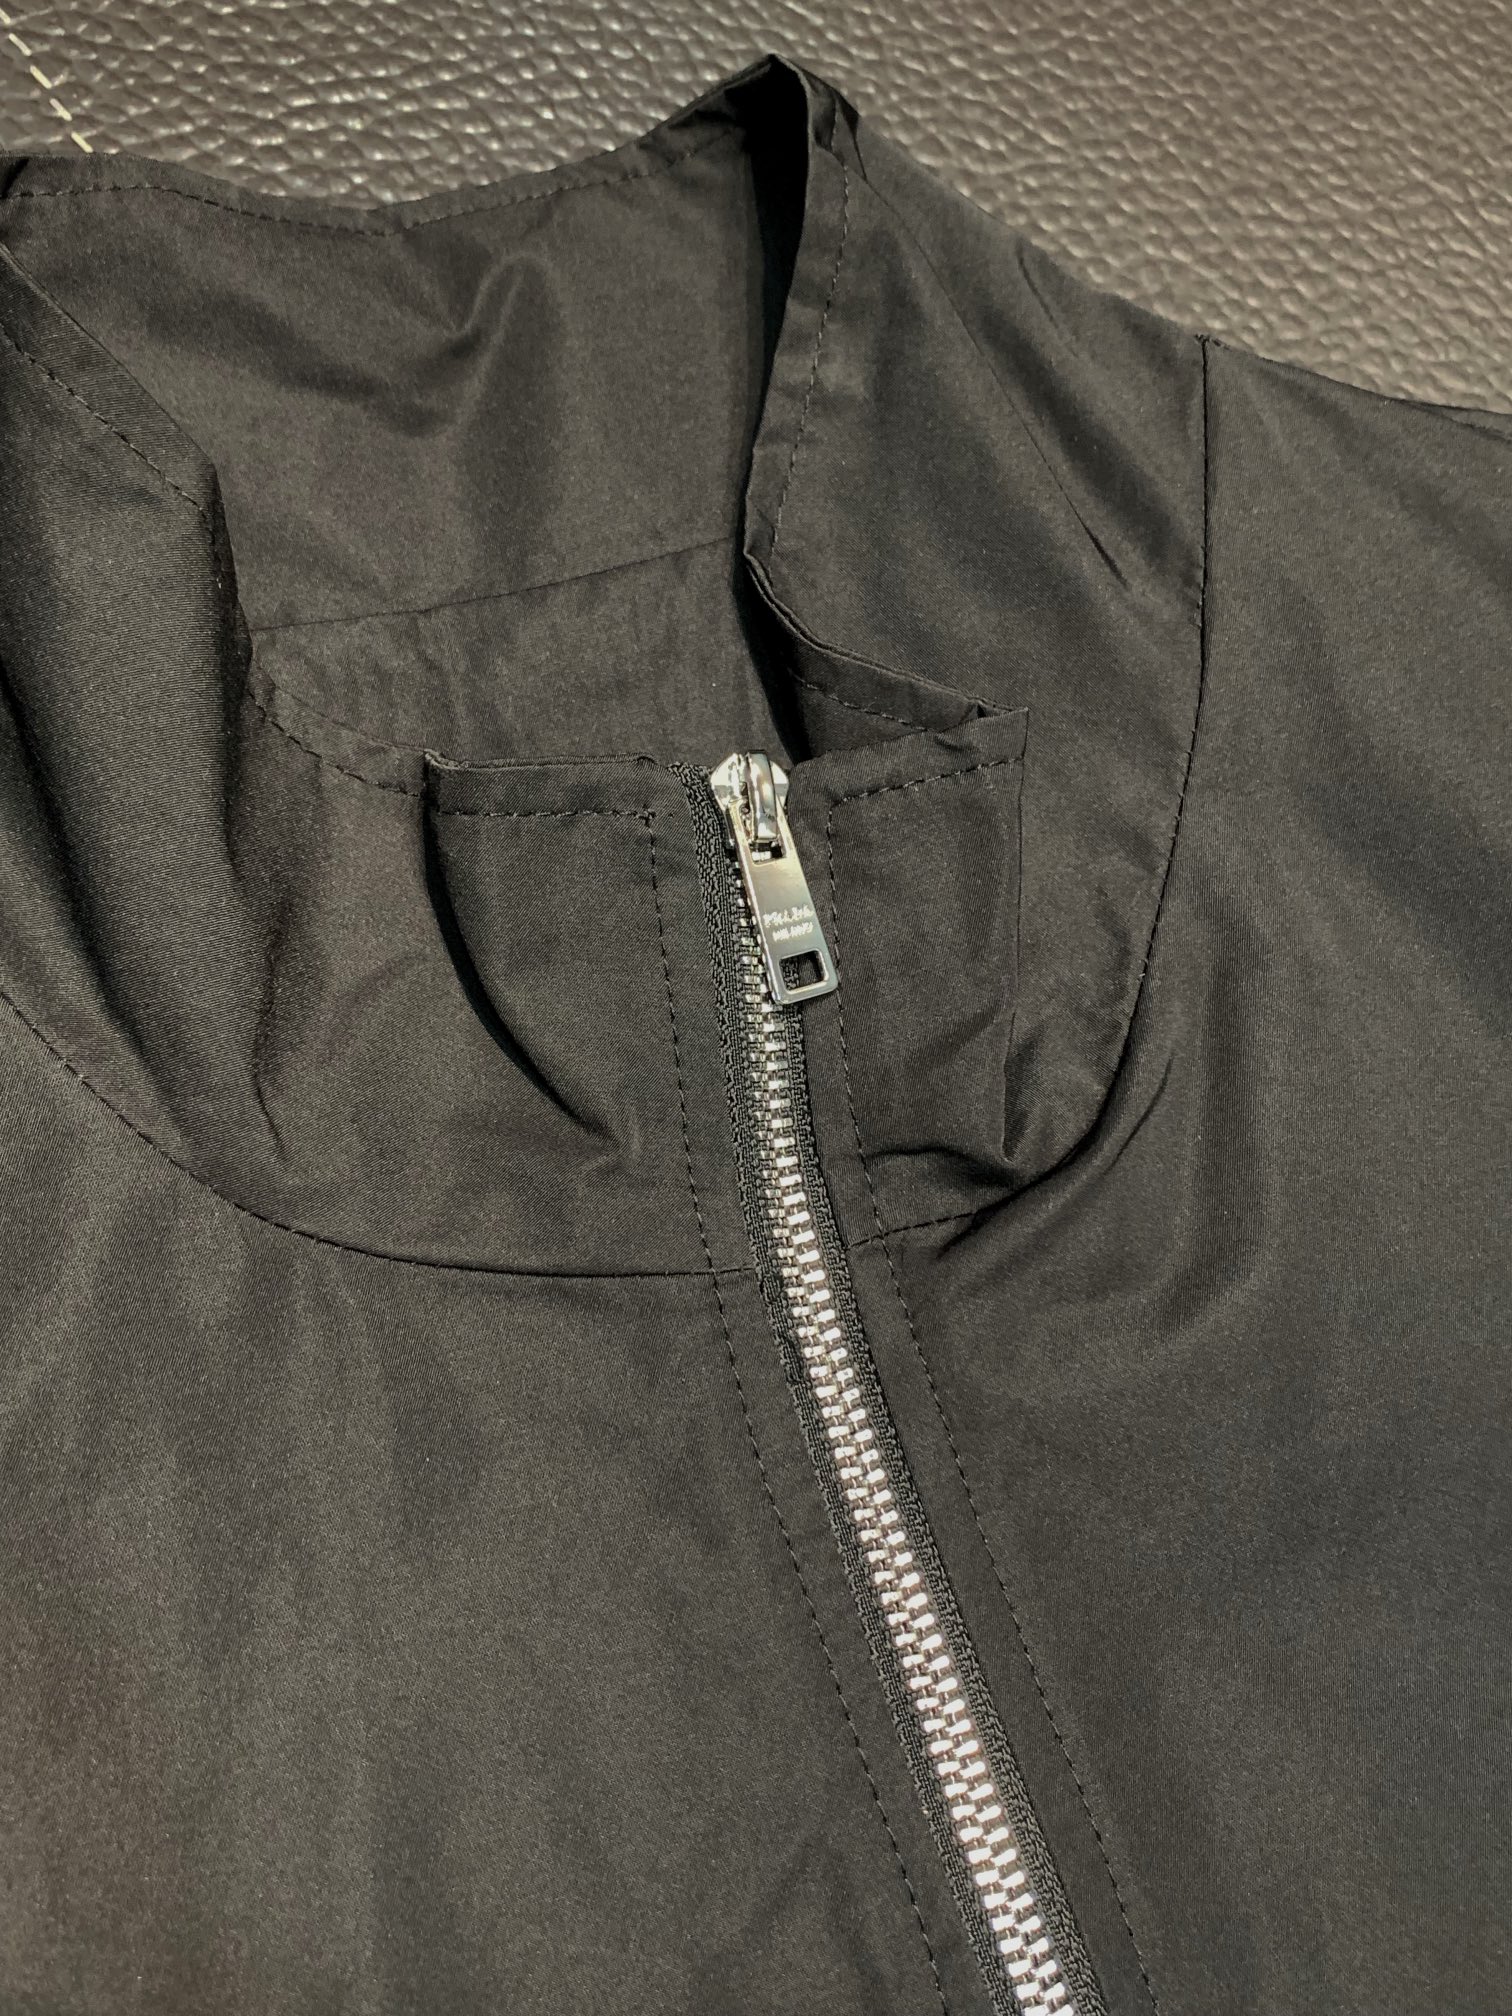 Prada普拉达独家专供最新四季时尚立领夹克休闲经典拉链外套经典设计感与颜值爆棚的外套品质更是无法挑剔品